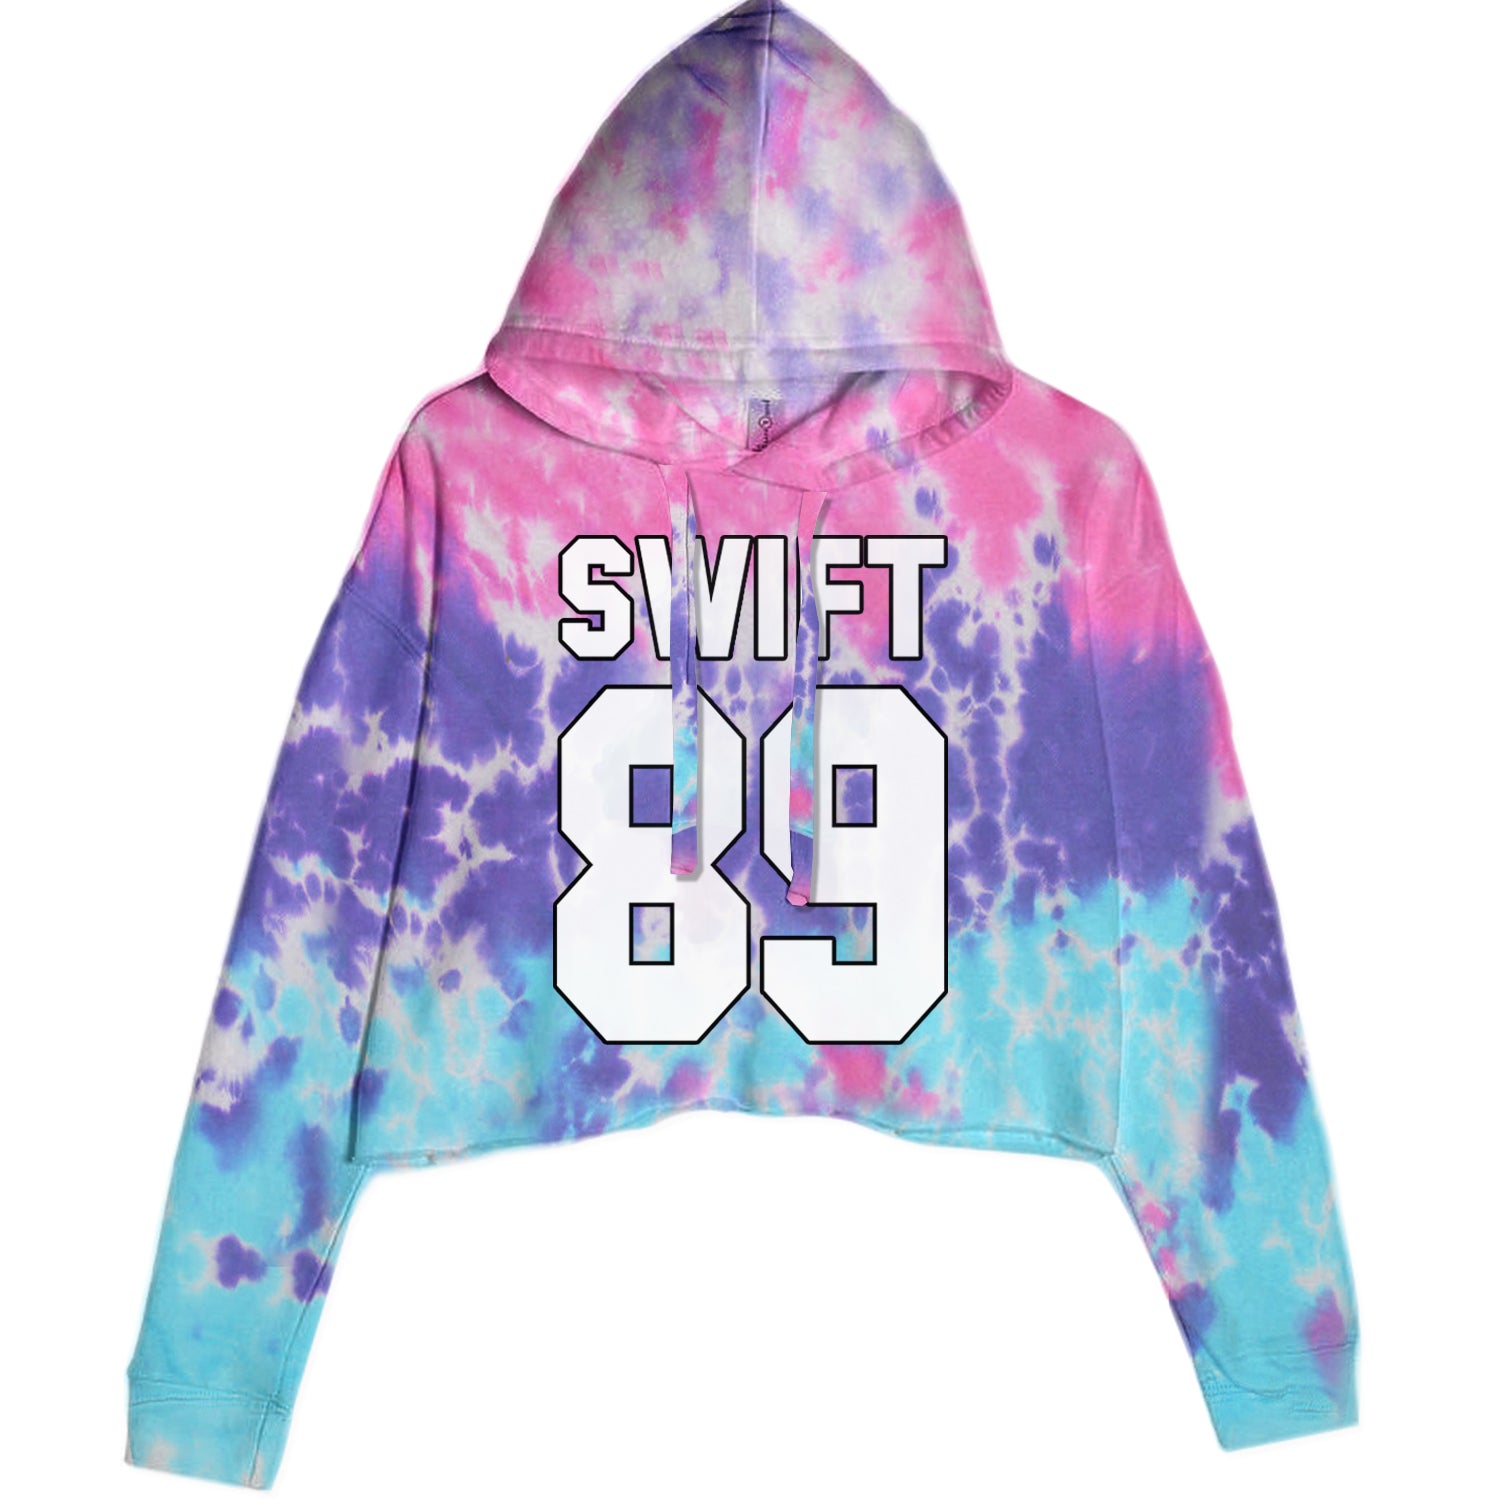 Swift 89 Birth Year Music Fan Era Poets Department Lover Cropped Hoodie Sweatshirt